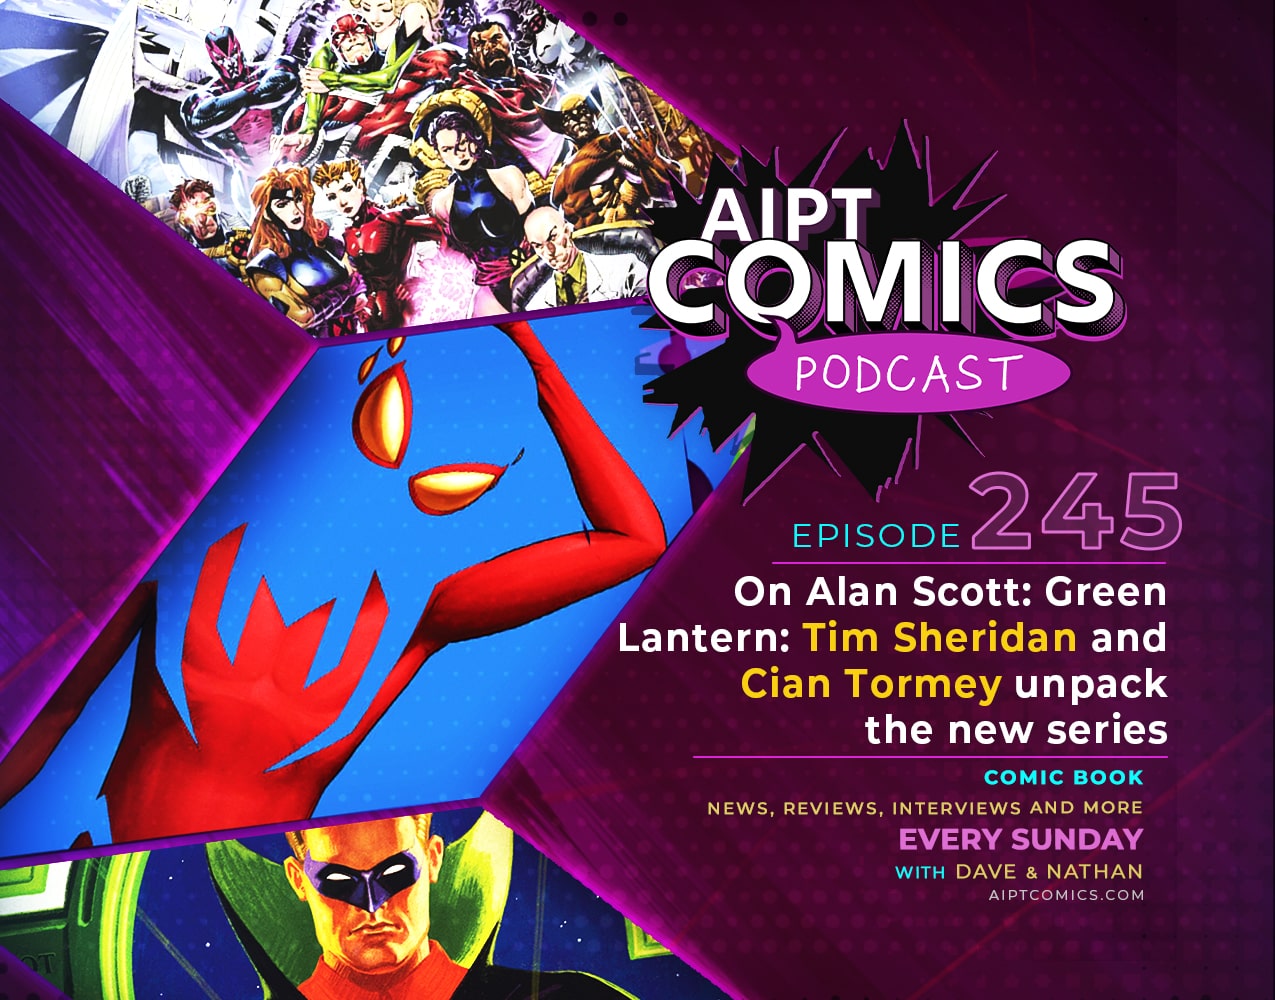 AIPT Comics Podcast Episode 245: On Alan Scott: Green Lantern: Tim Sheridan and Cian Tormey unpack the new series